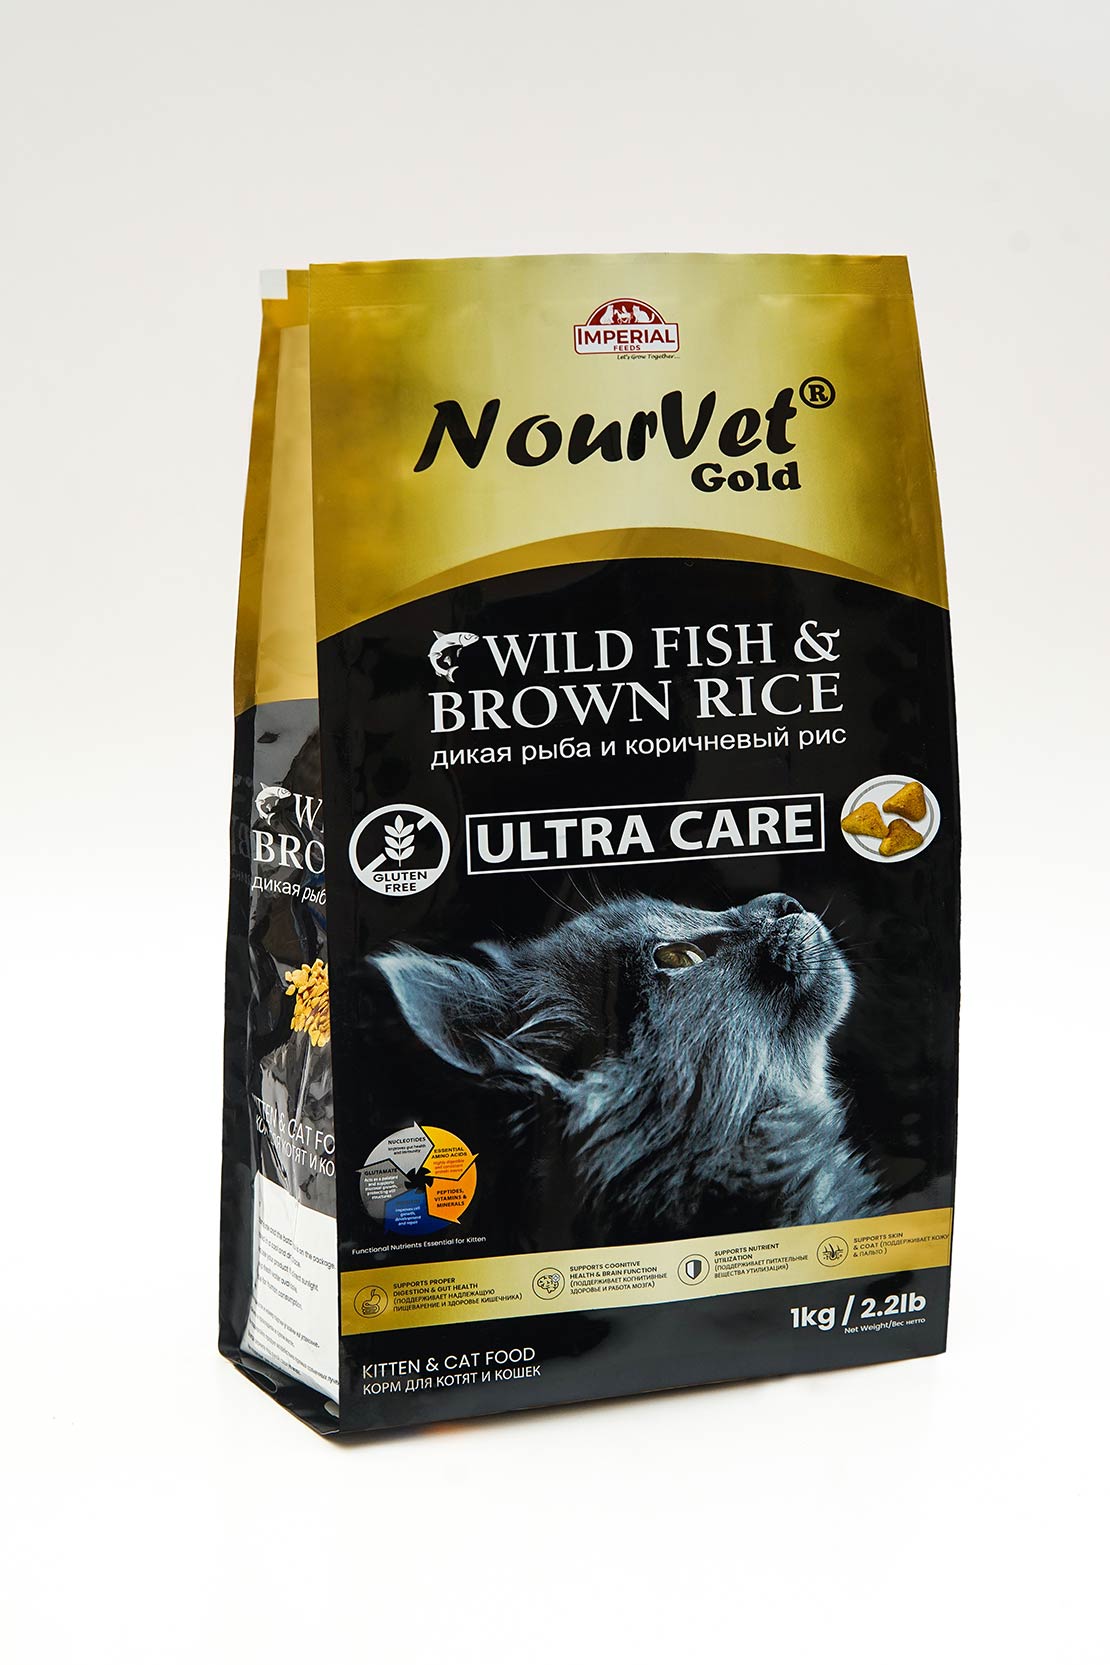 Nourvet Gold Fish & Brown Rice Kitten & Cat Food pets-park-pk